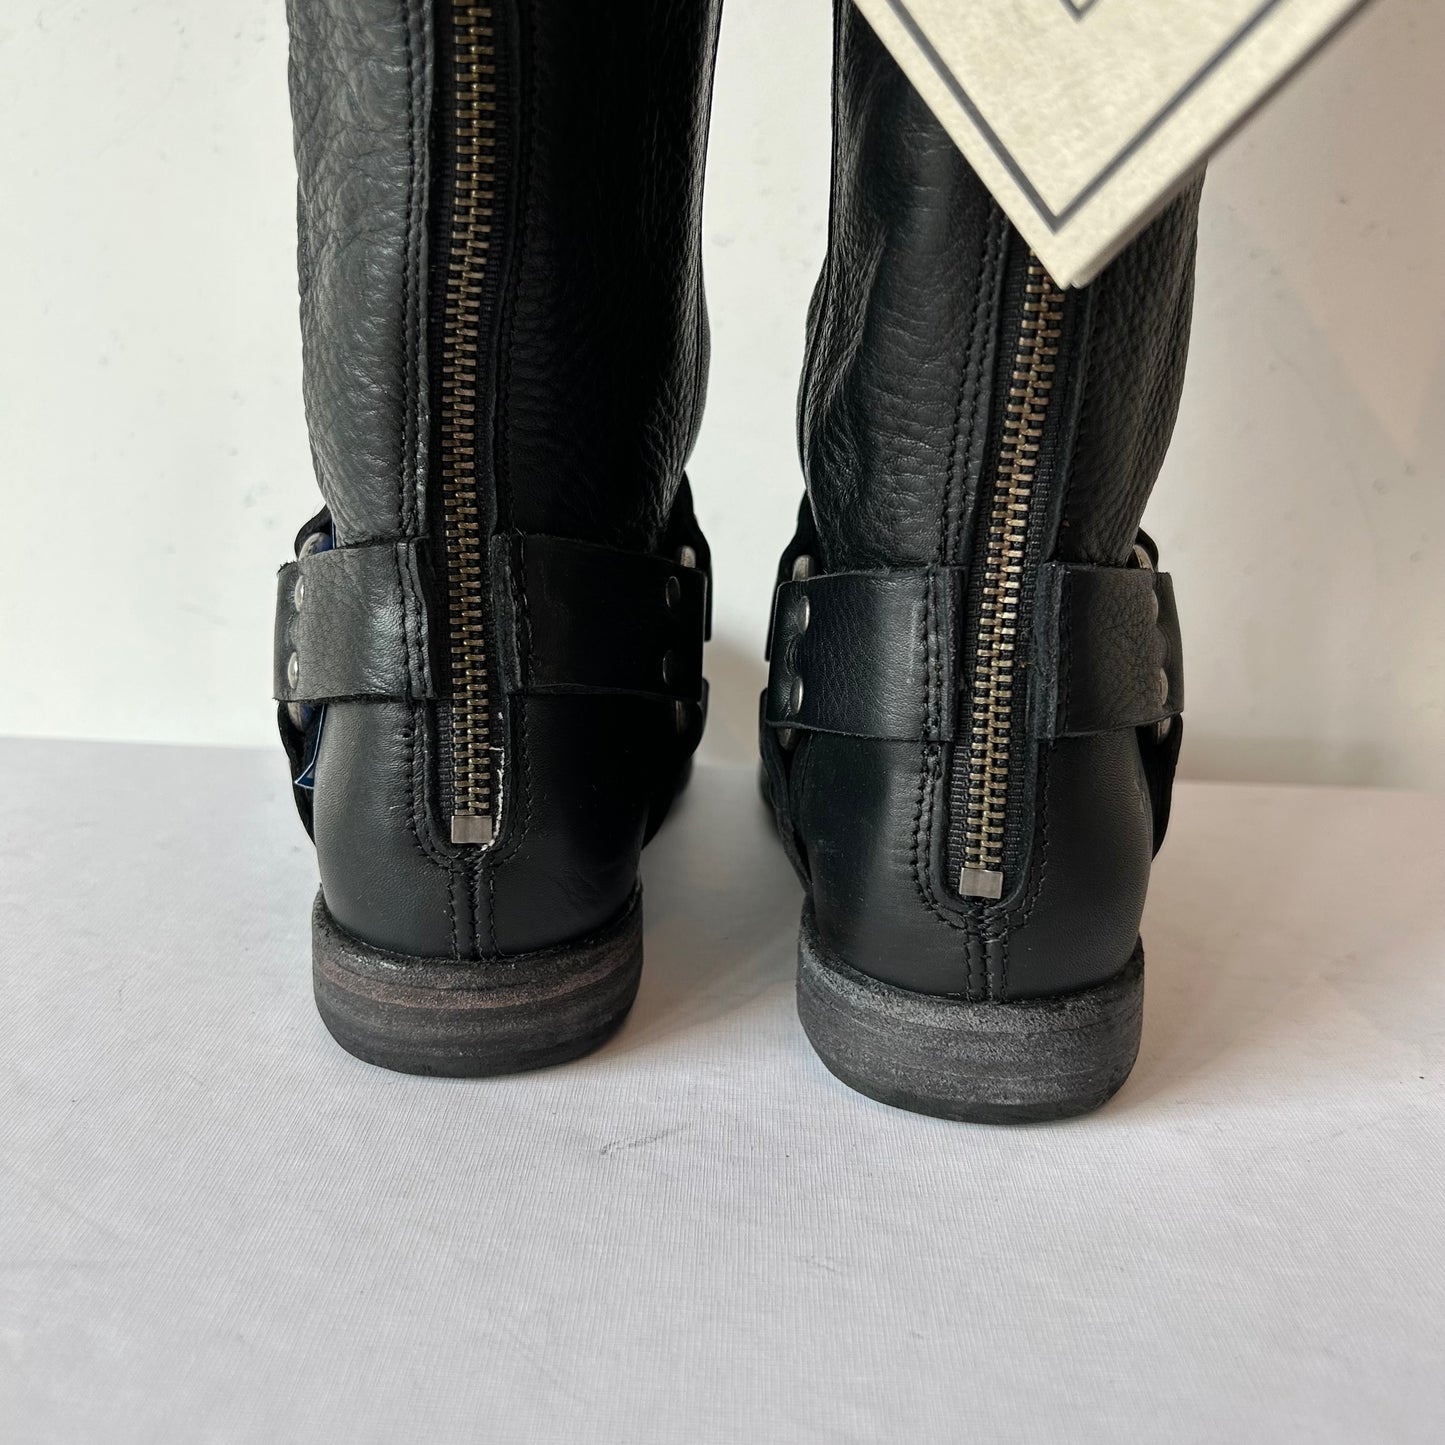 5.5 FRYE Tall Black Boots